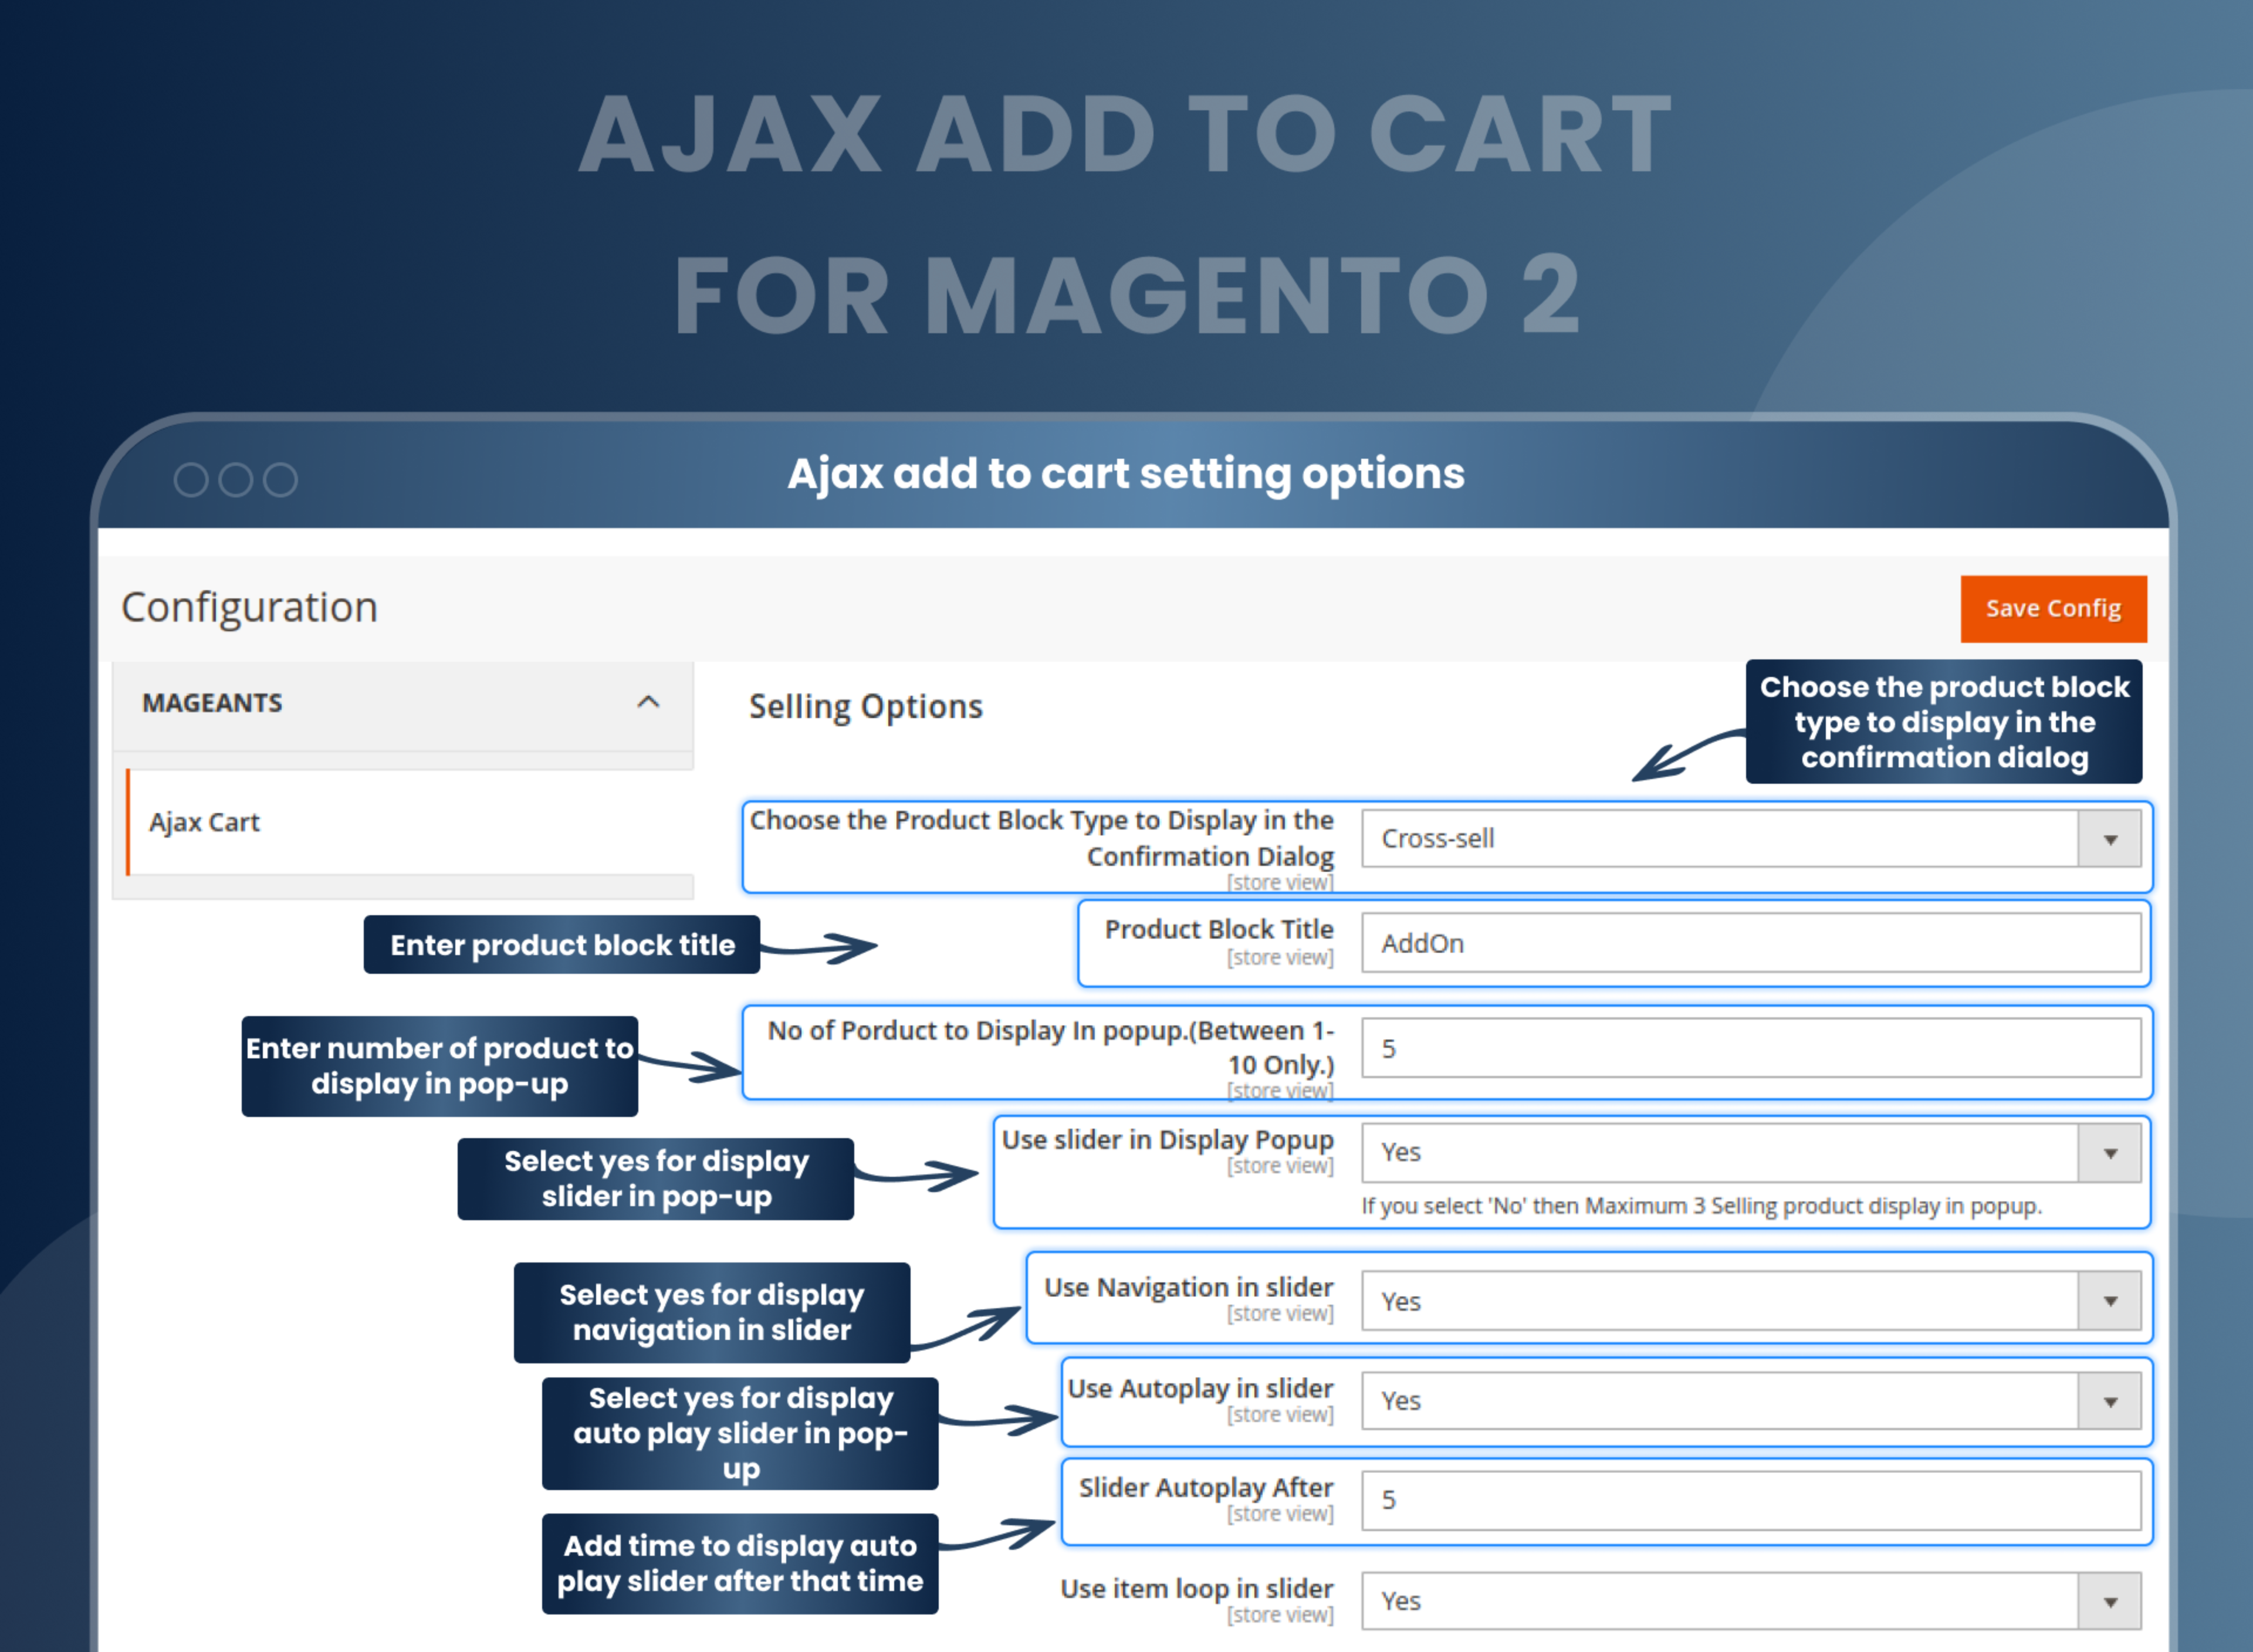 Ajax add to cart setting options